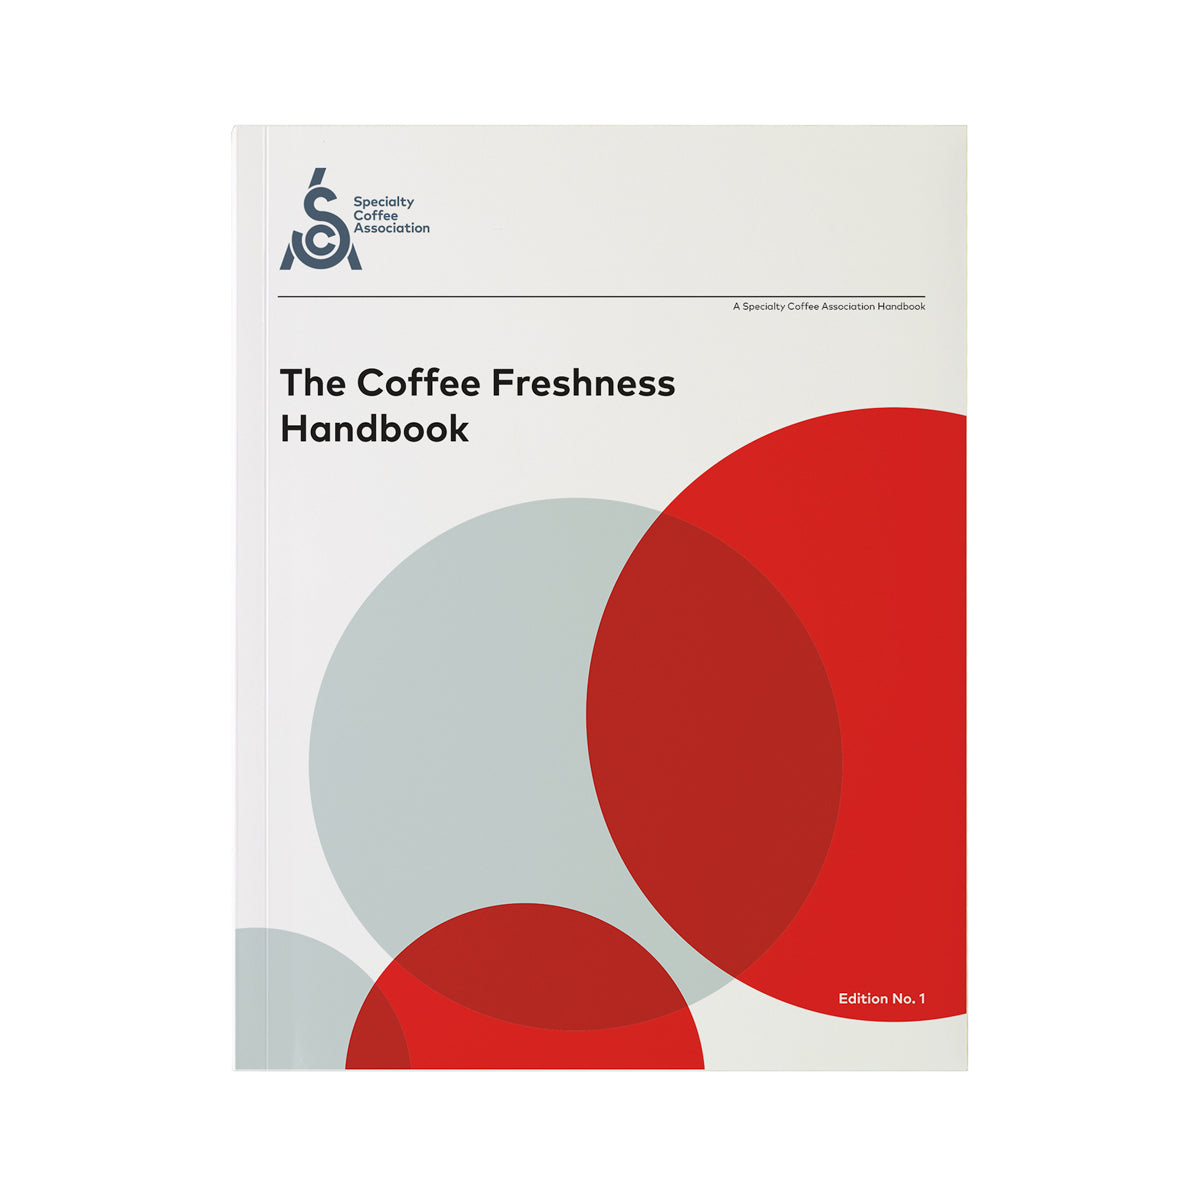 The Coffee Freshness Handbook